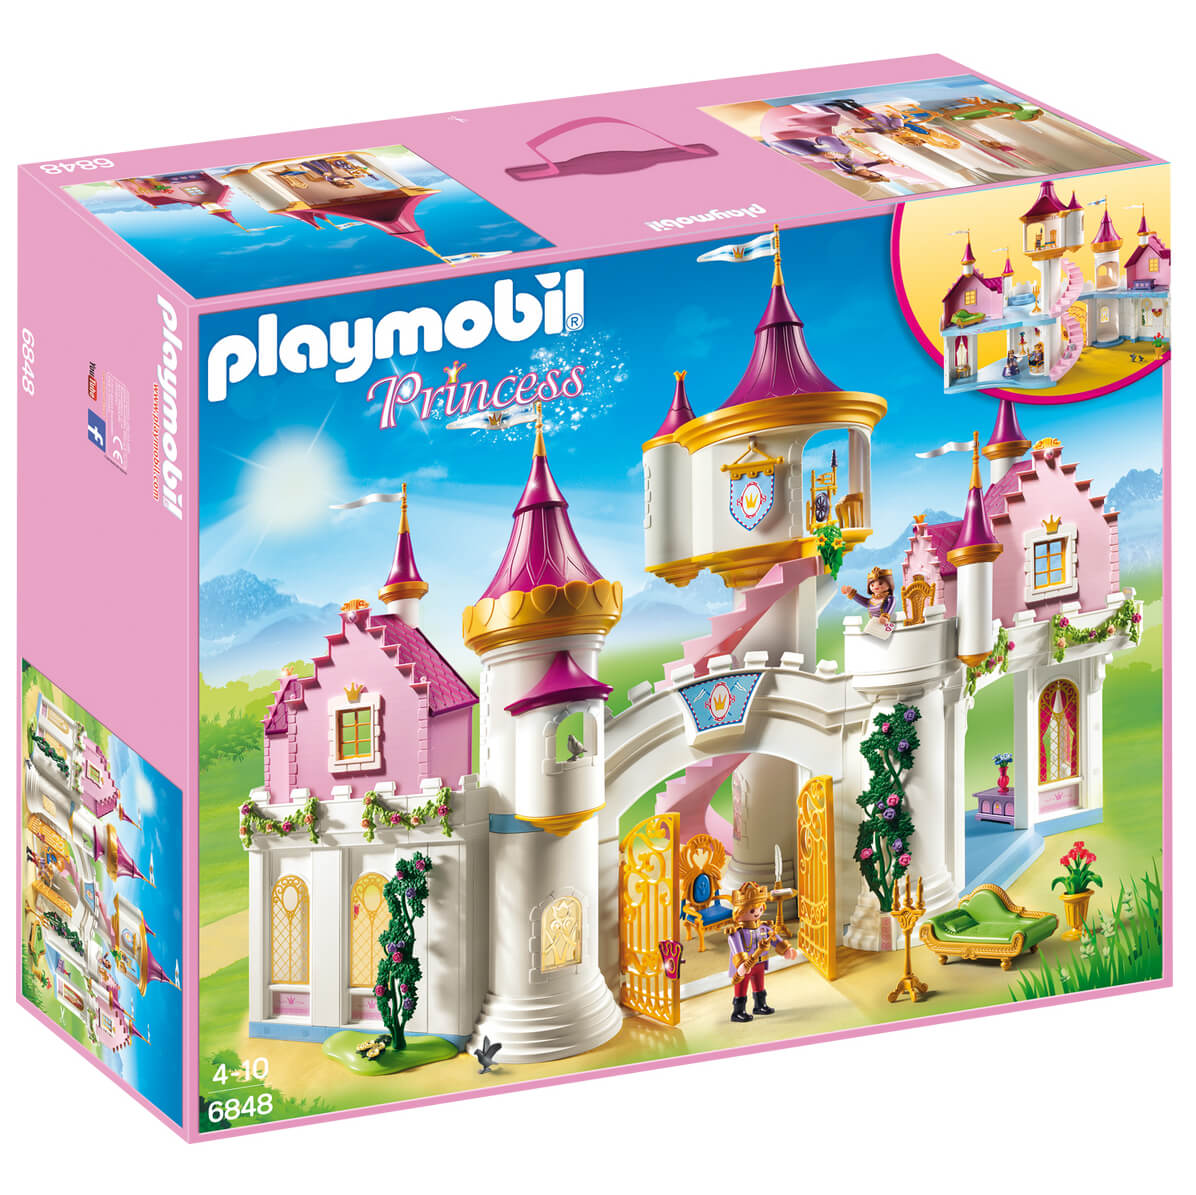 Playmobil Grand Château de Princesse (6848) Toys